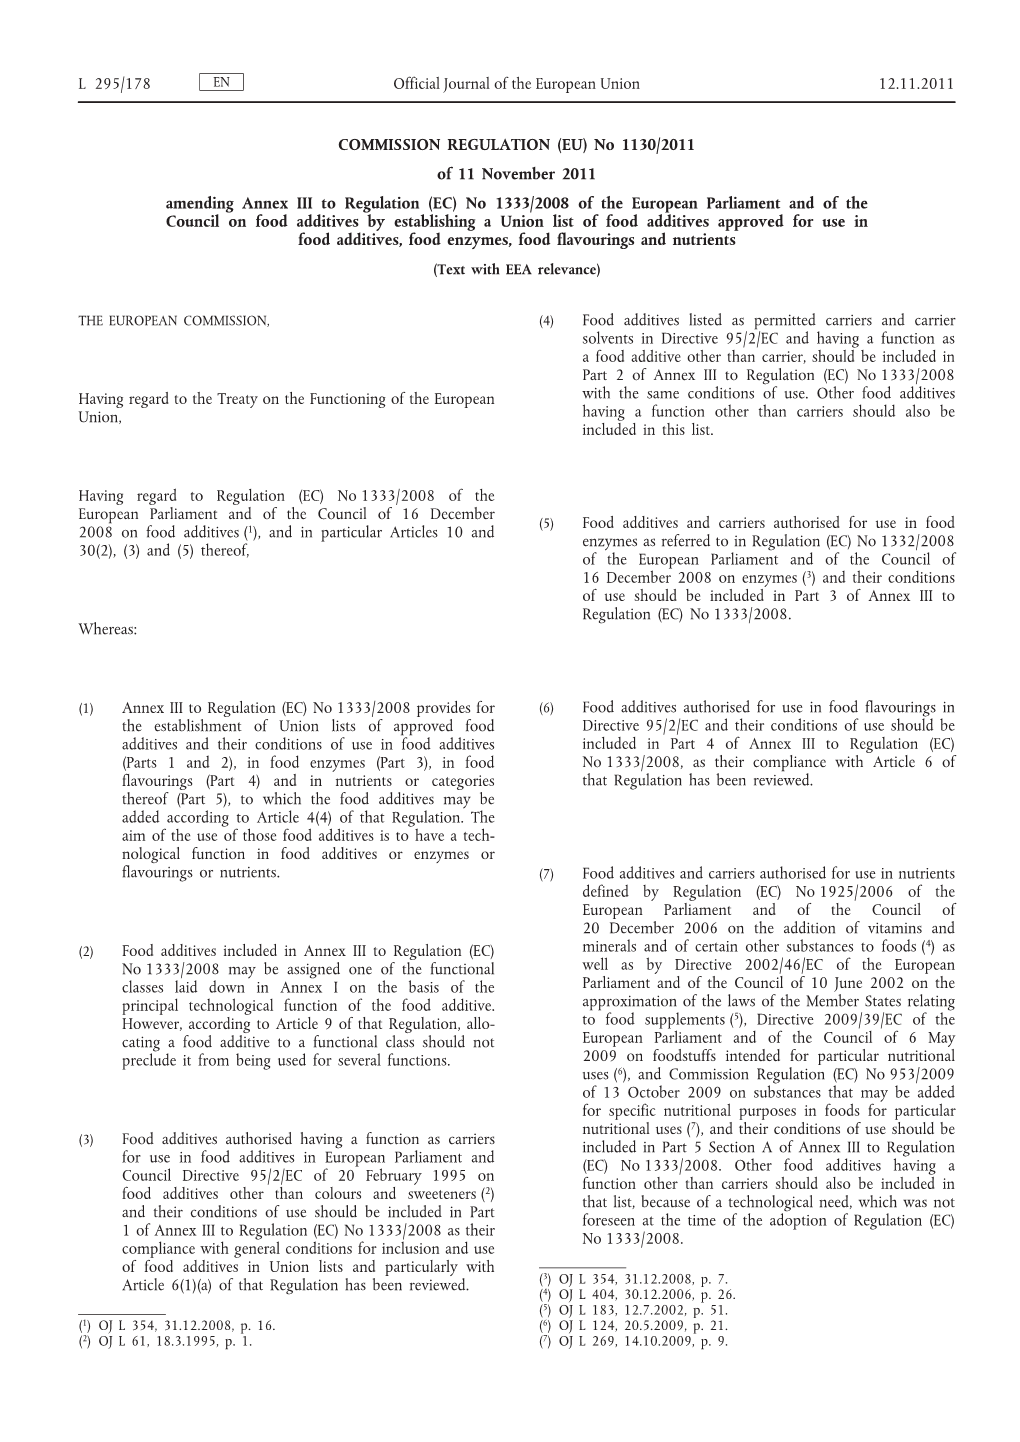 EU) No 1130/2011 Amending Annex III to Regulation (EC